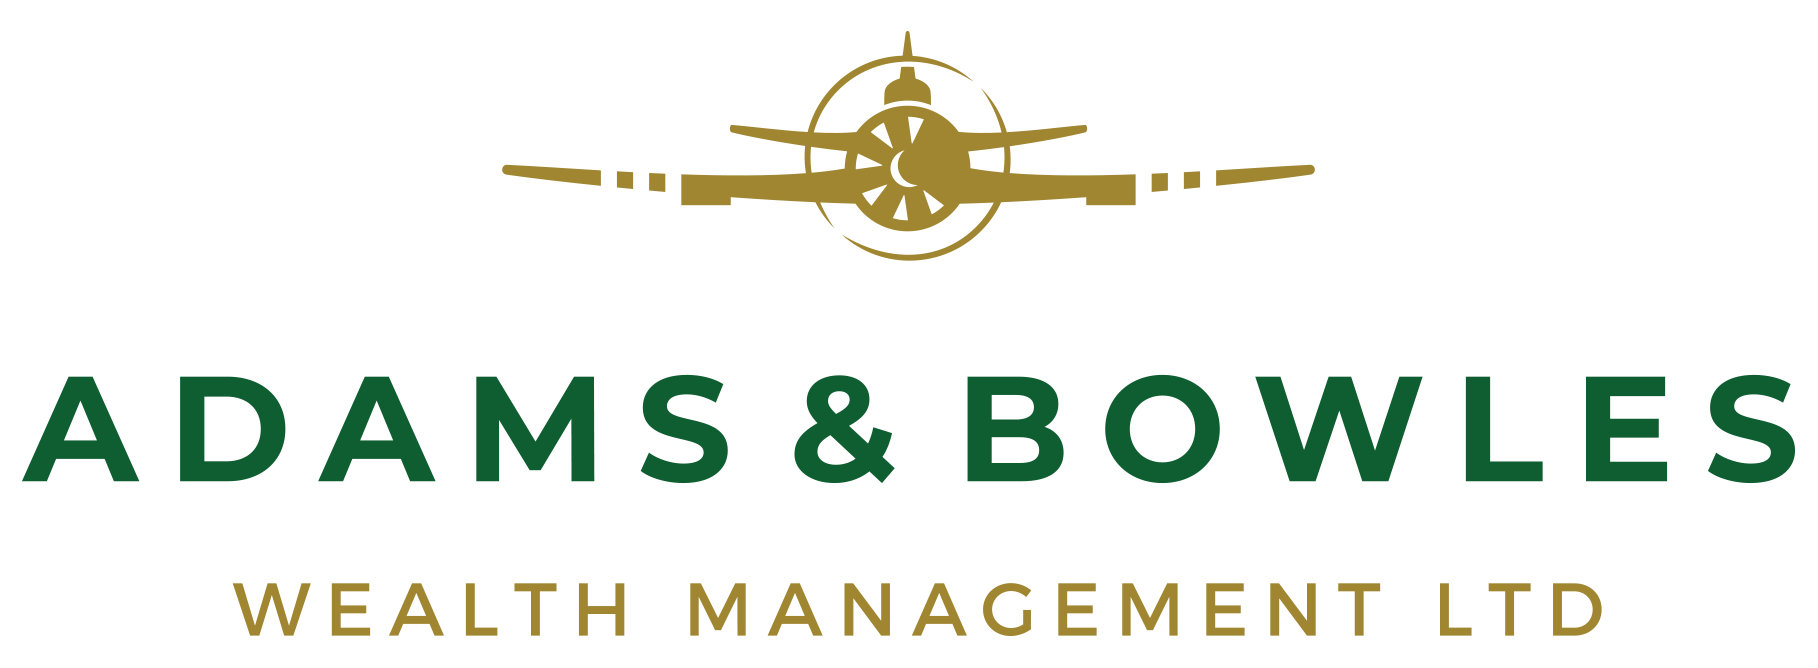 Adams & Bowles Wealth Management Ltd Logo